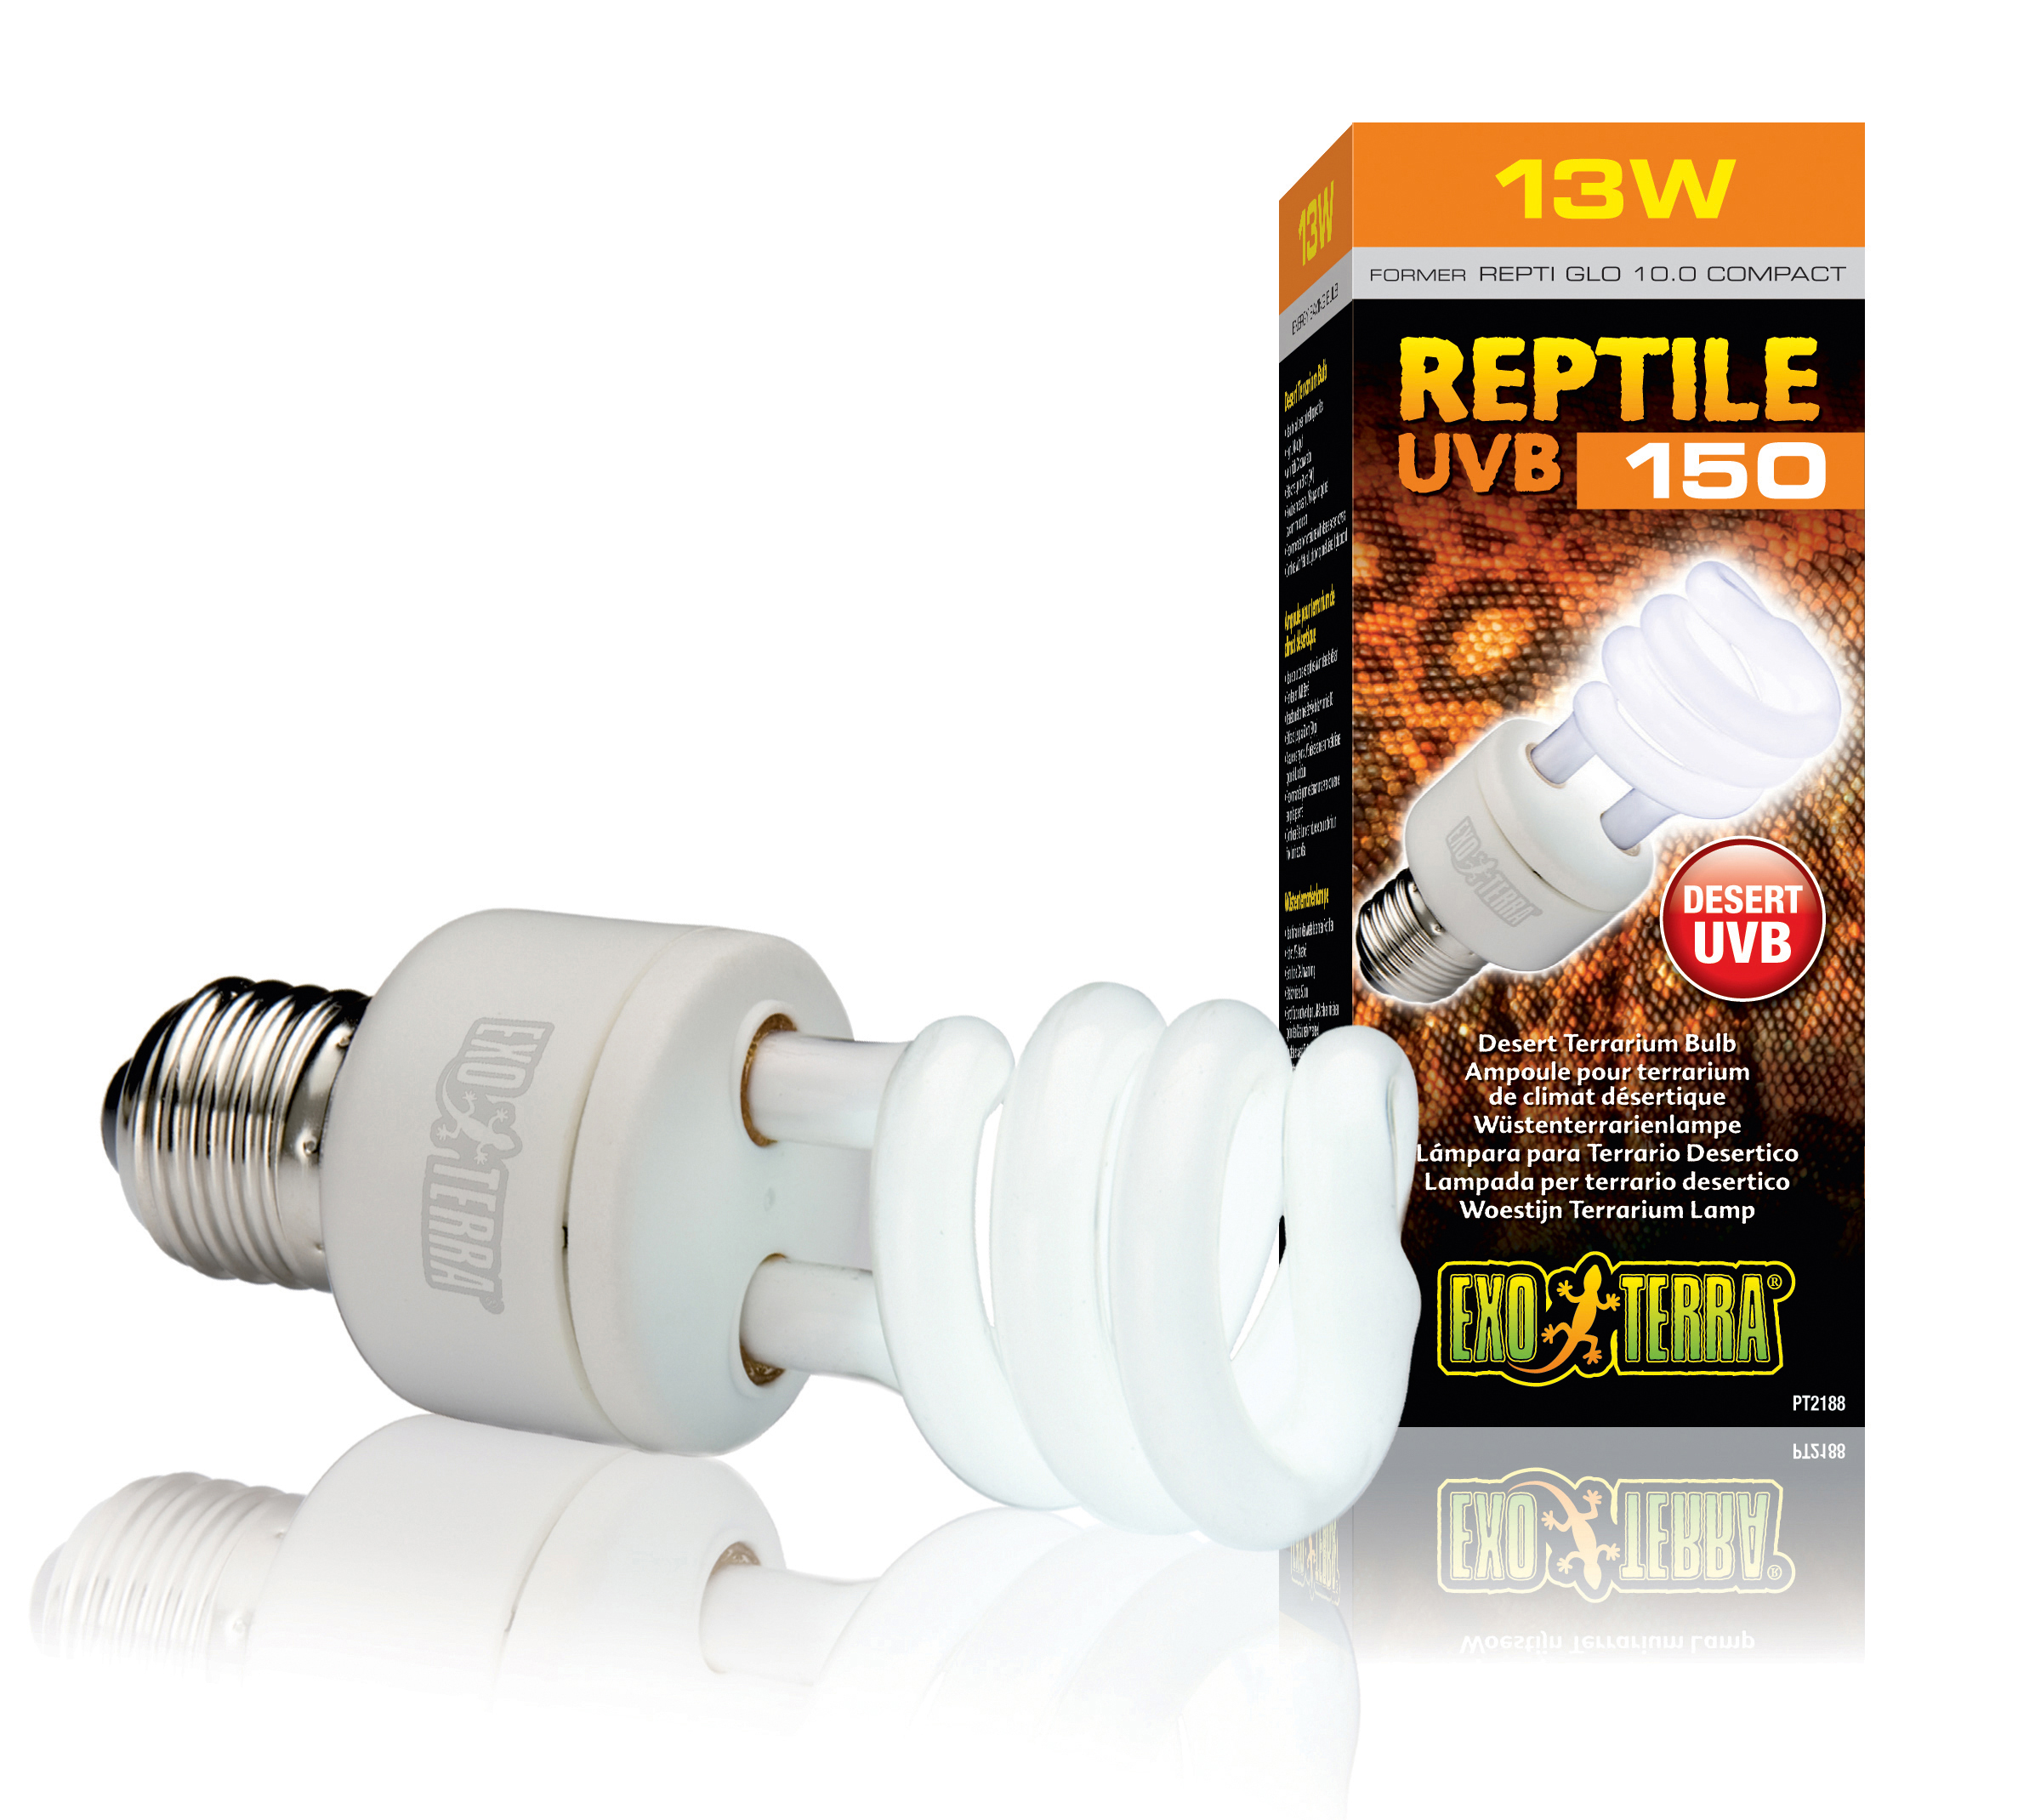 Ex reptile uvb150 desert lamp - <Product shot>